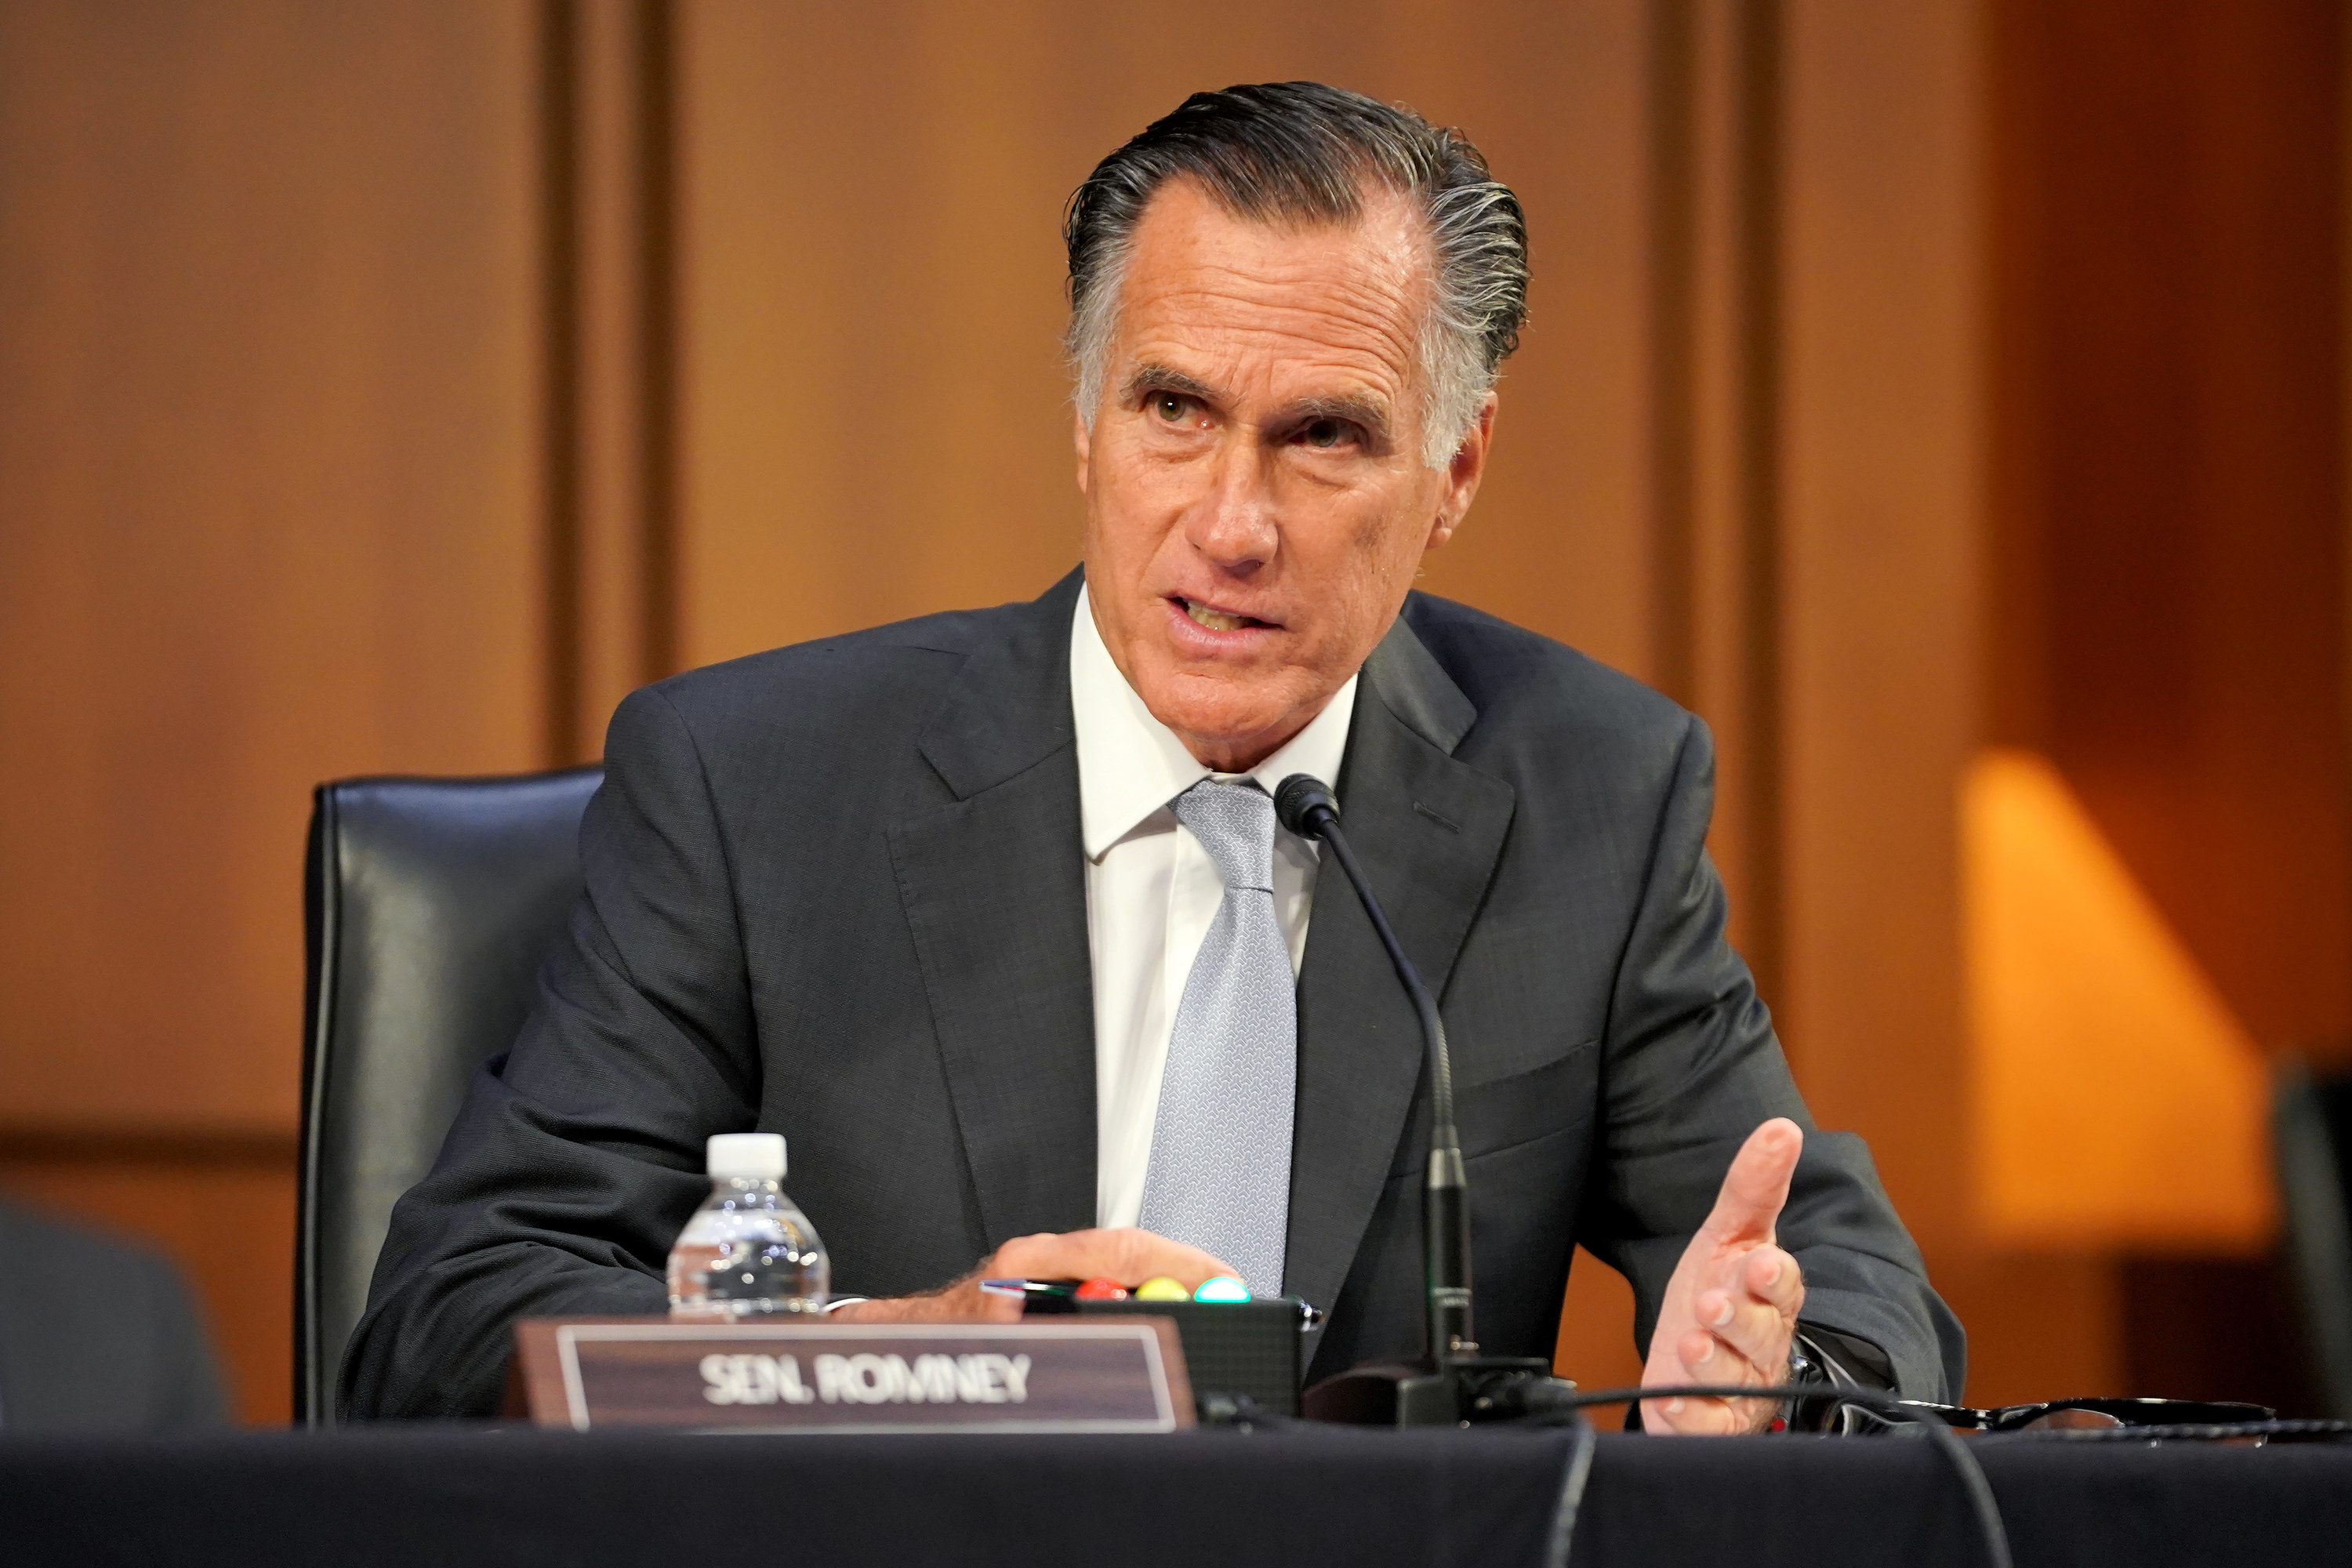 Mitt Romney speaking into a microphone